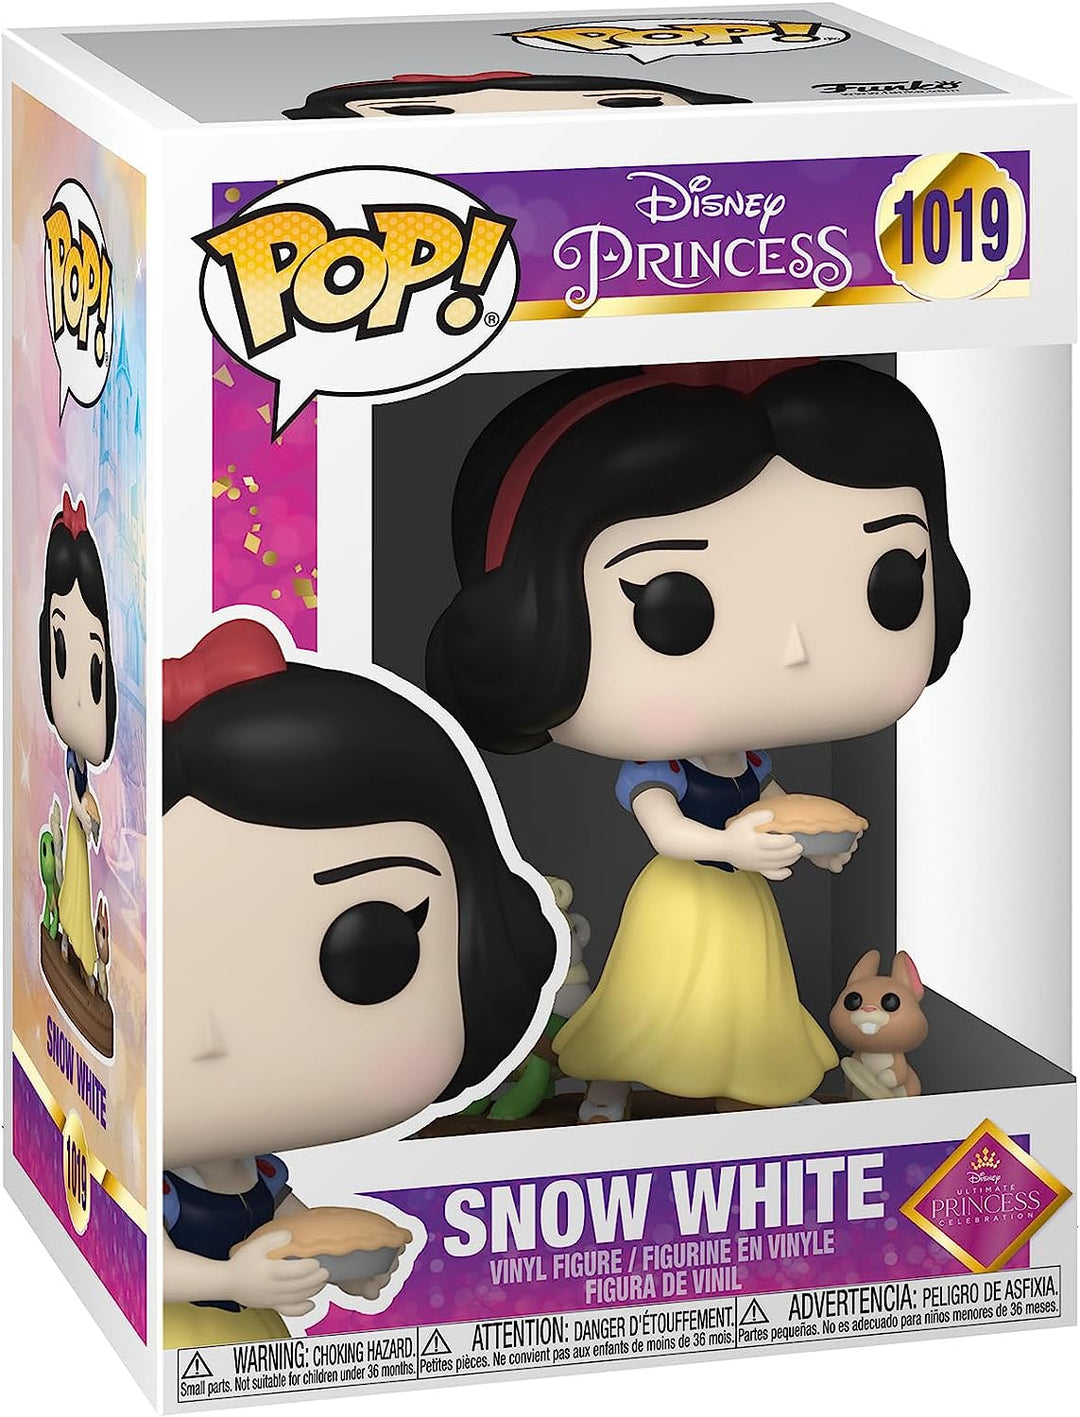 Funko Disney Ultimate Princess Snow White Pop! Vinyl Figure Product Image